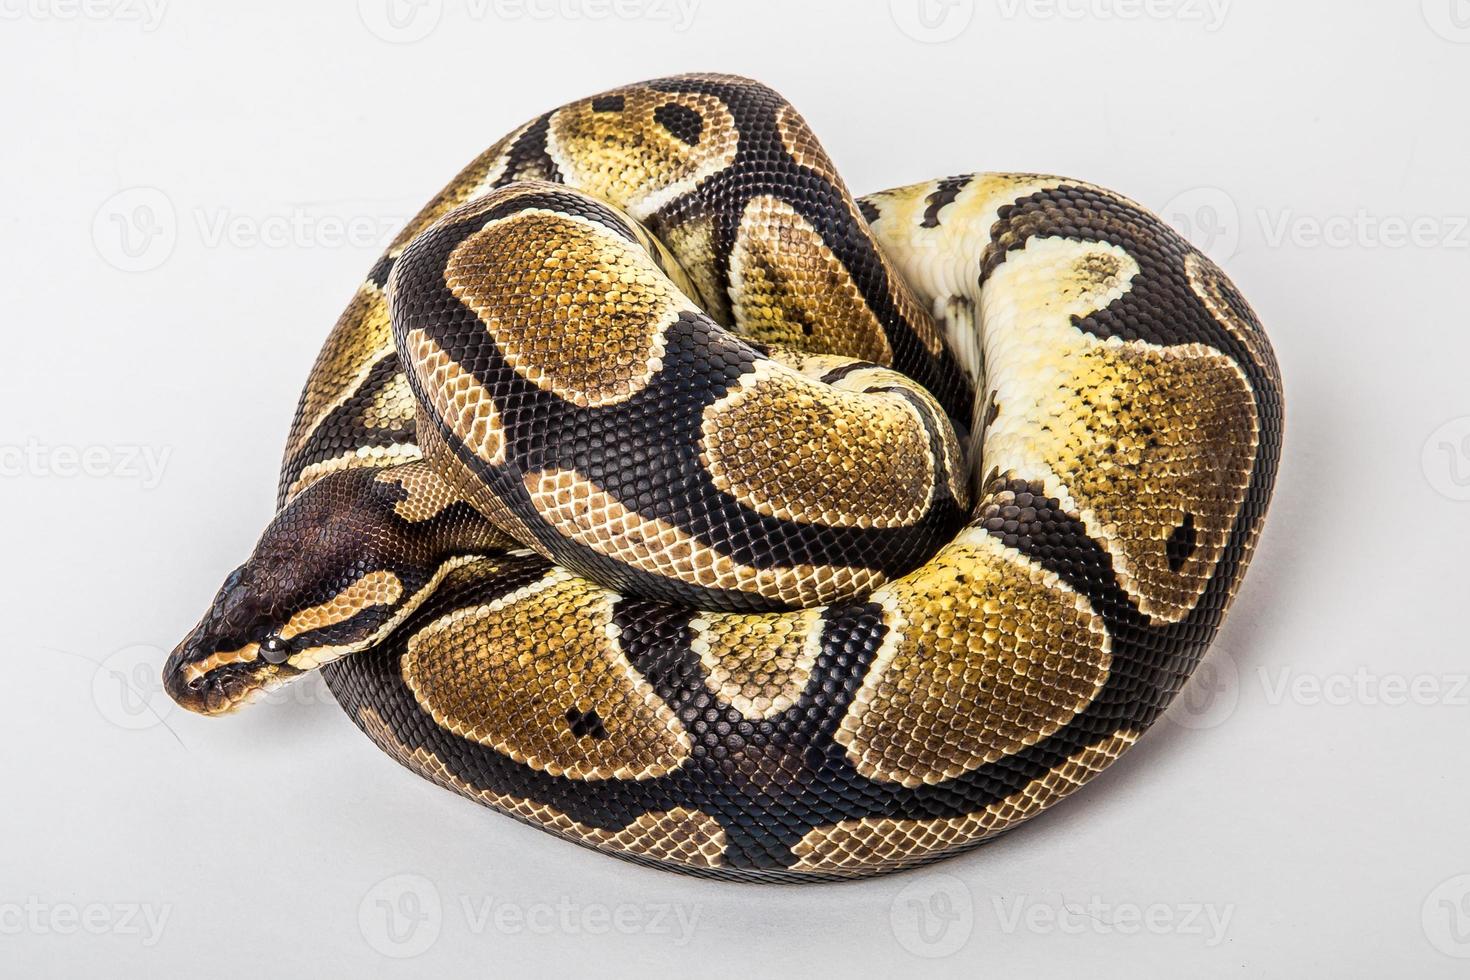 Ball python photo